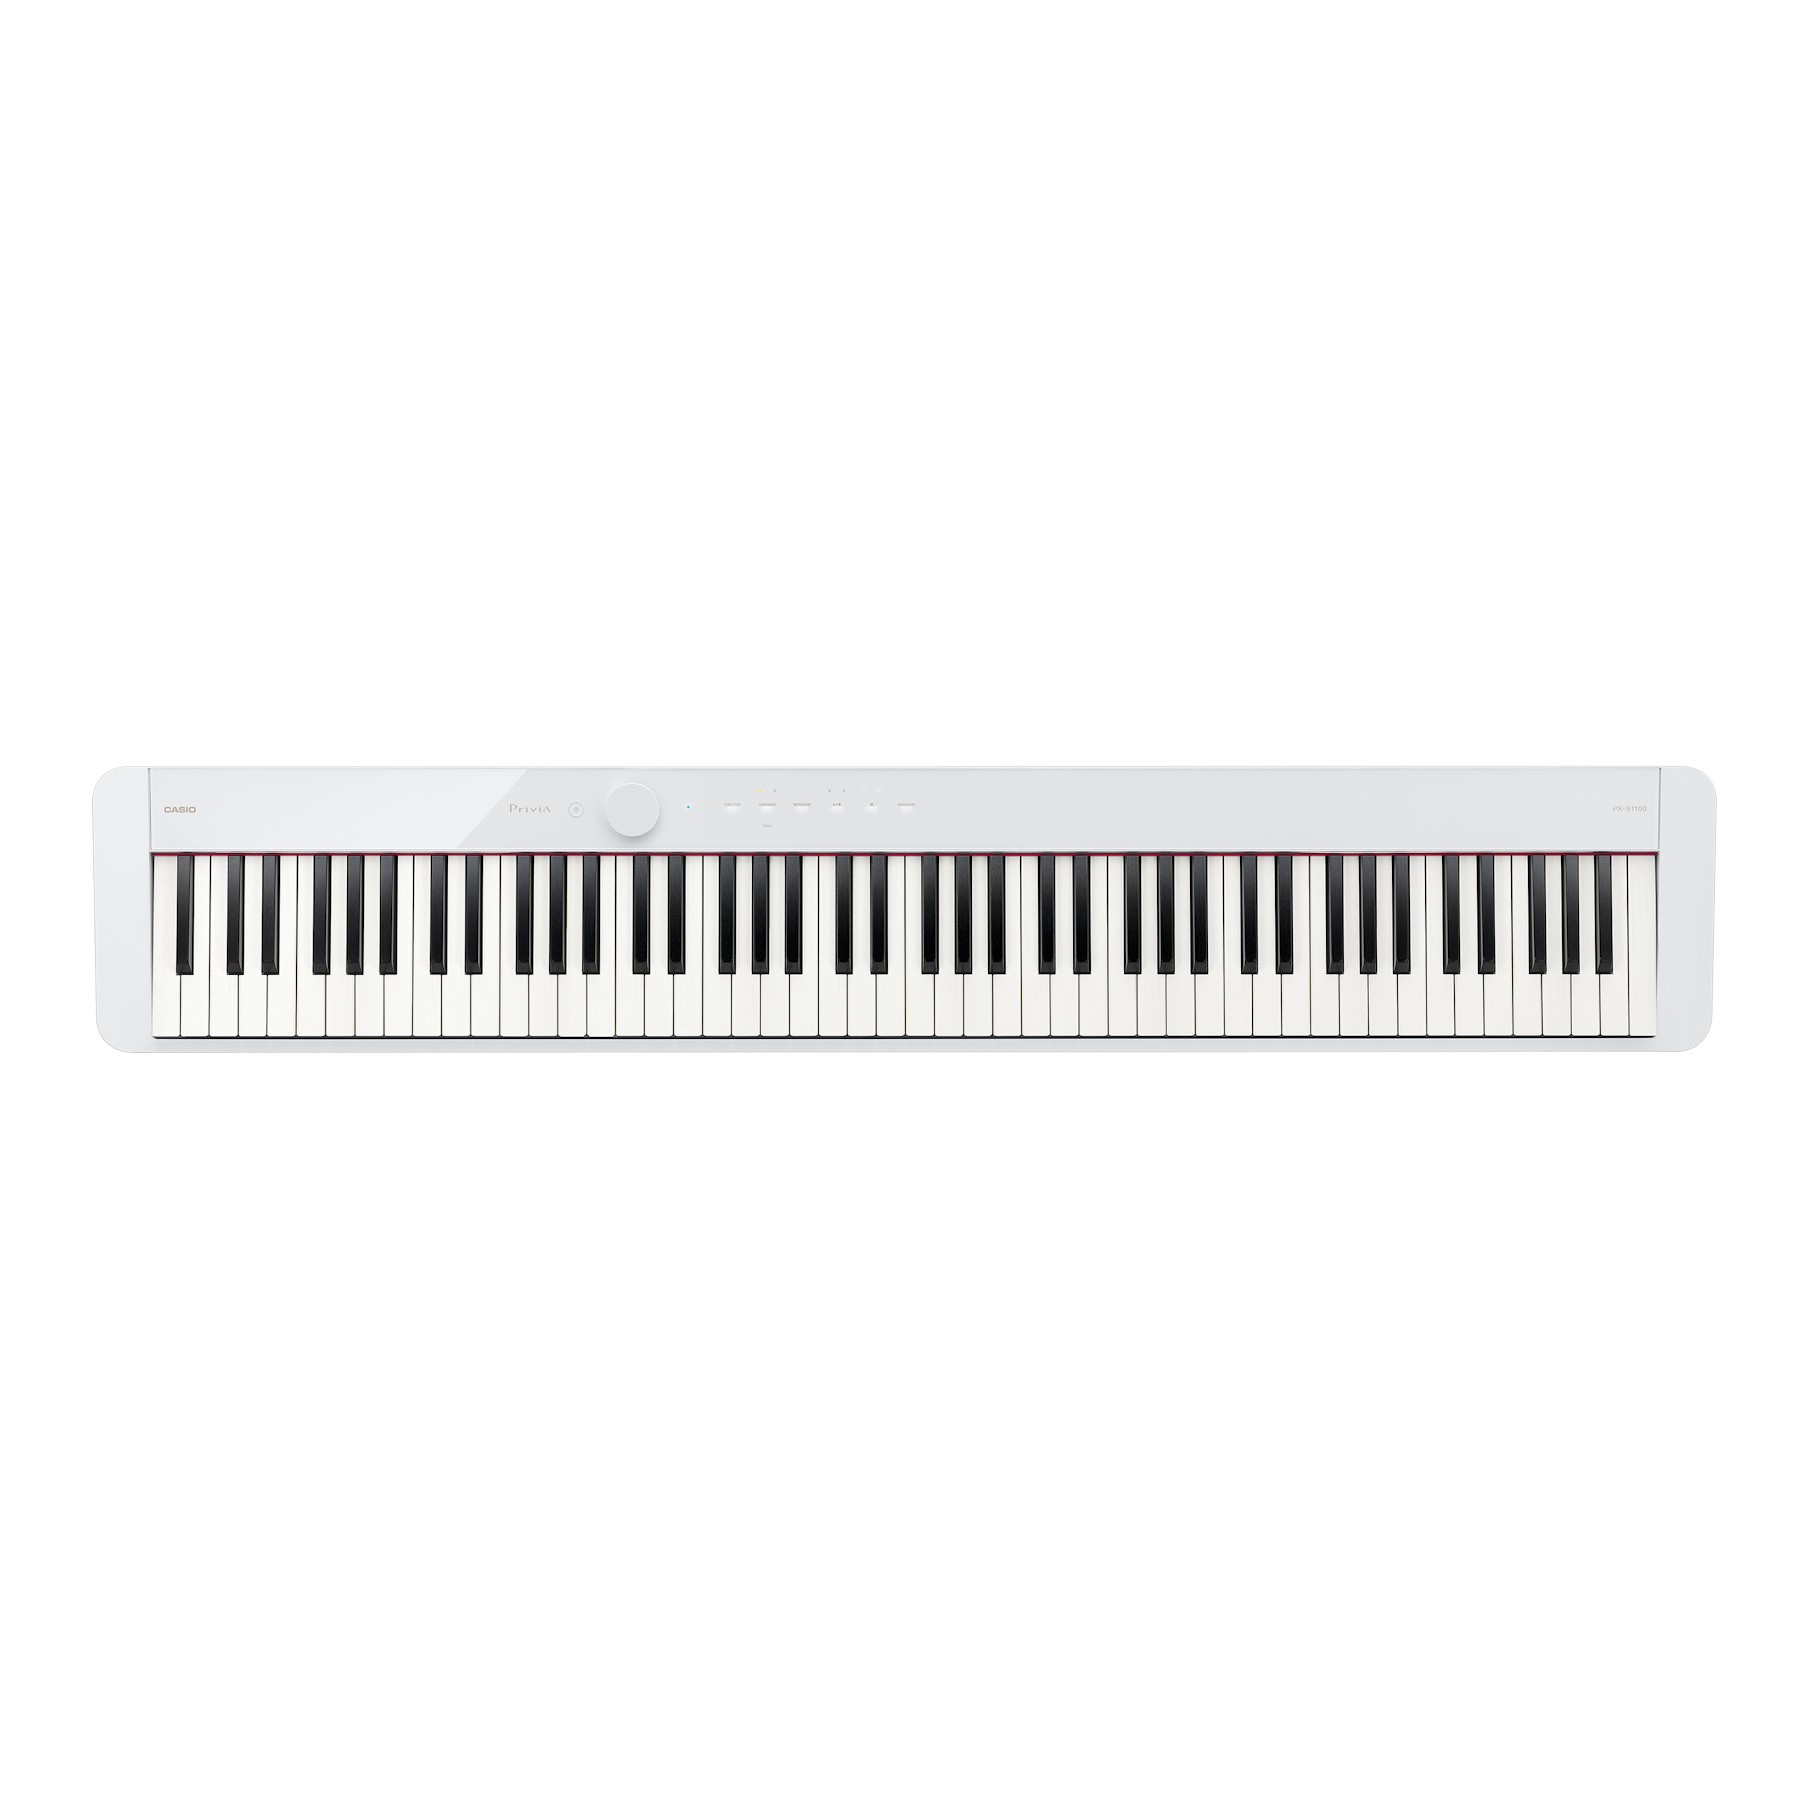 Fremragende undergrundsbane Framework Casio Privia Digital Piano PX-S1100 - White | DuBaldo Music Center